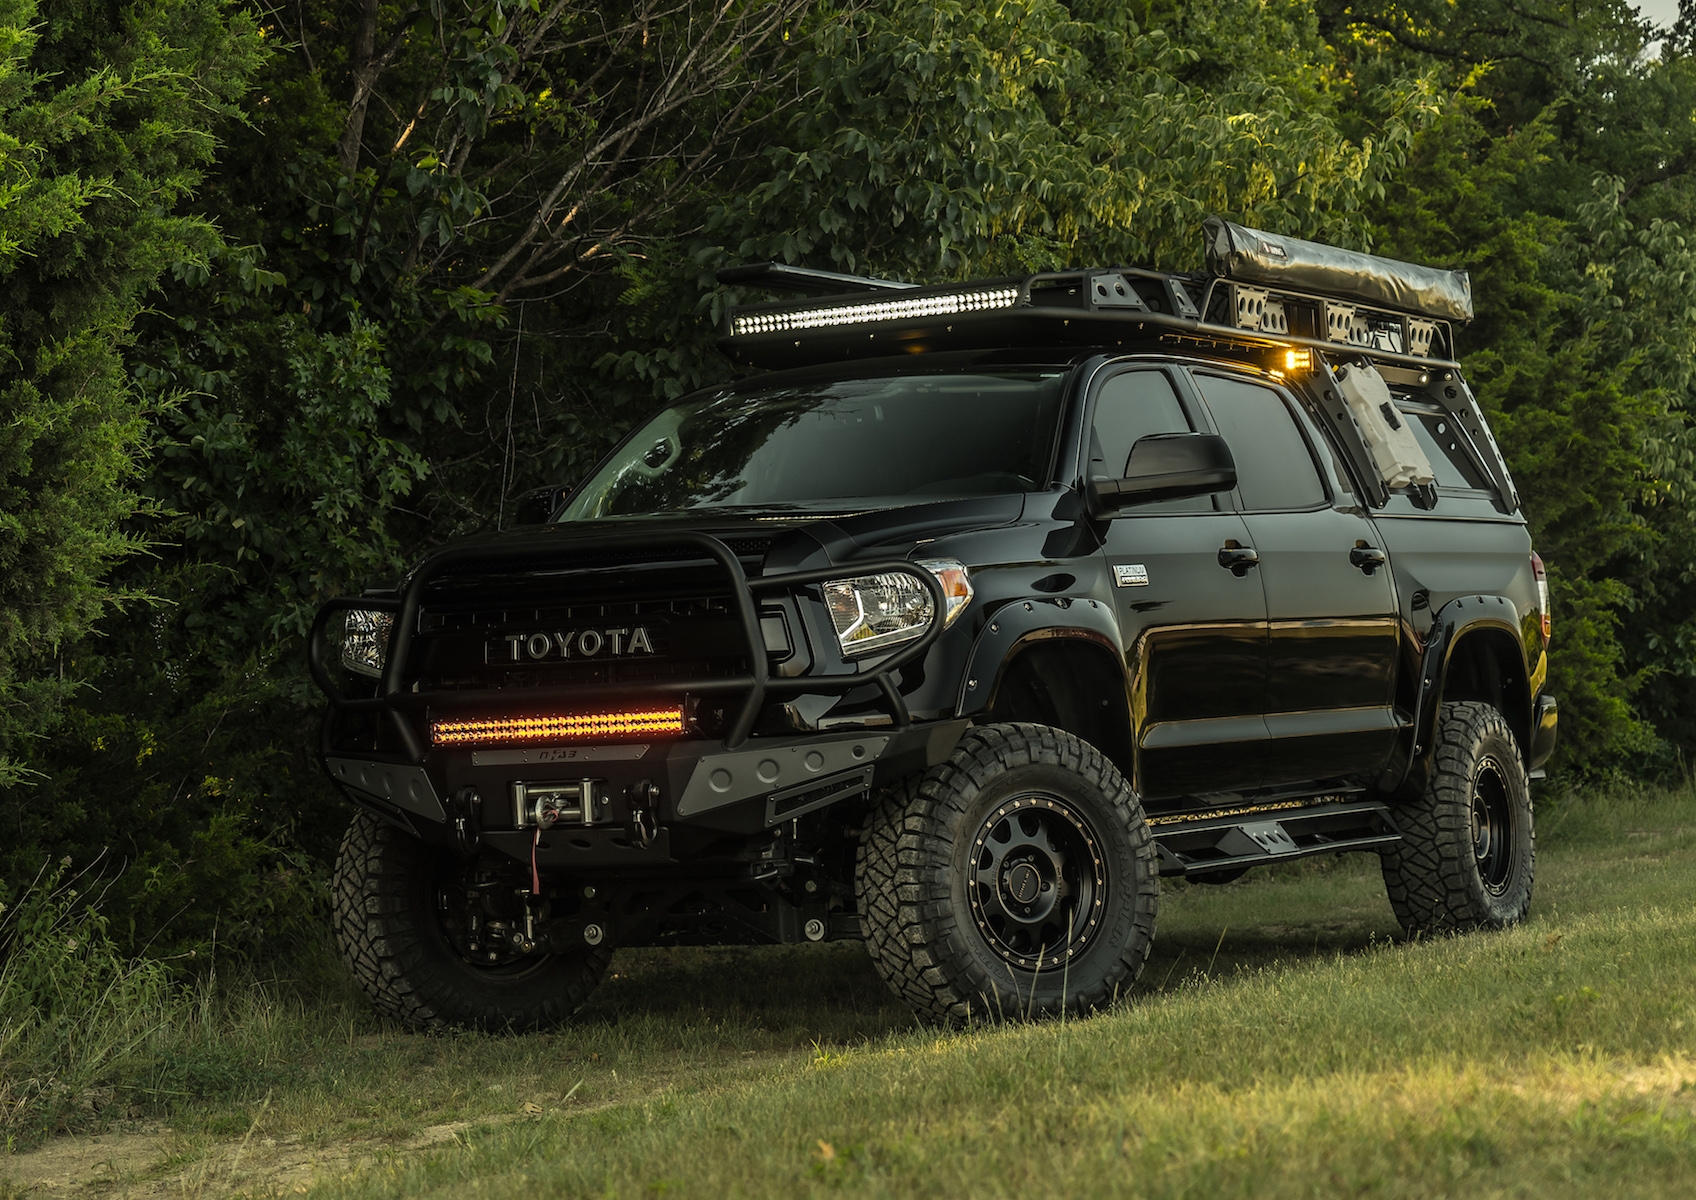 Kevin Costner's Custom Toyota Tundra